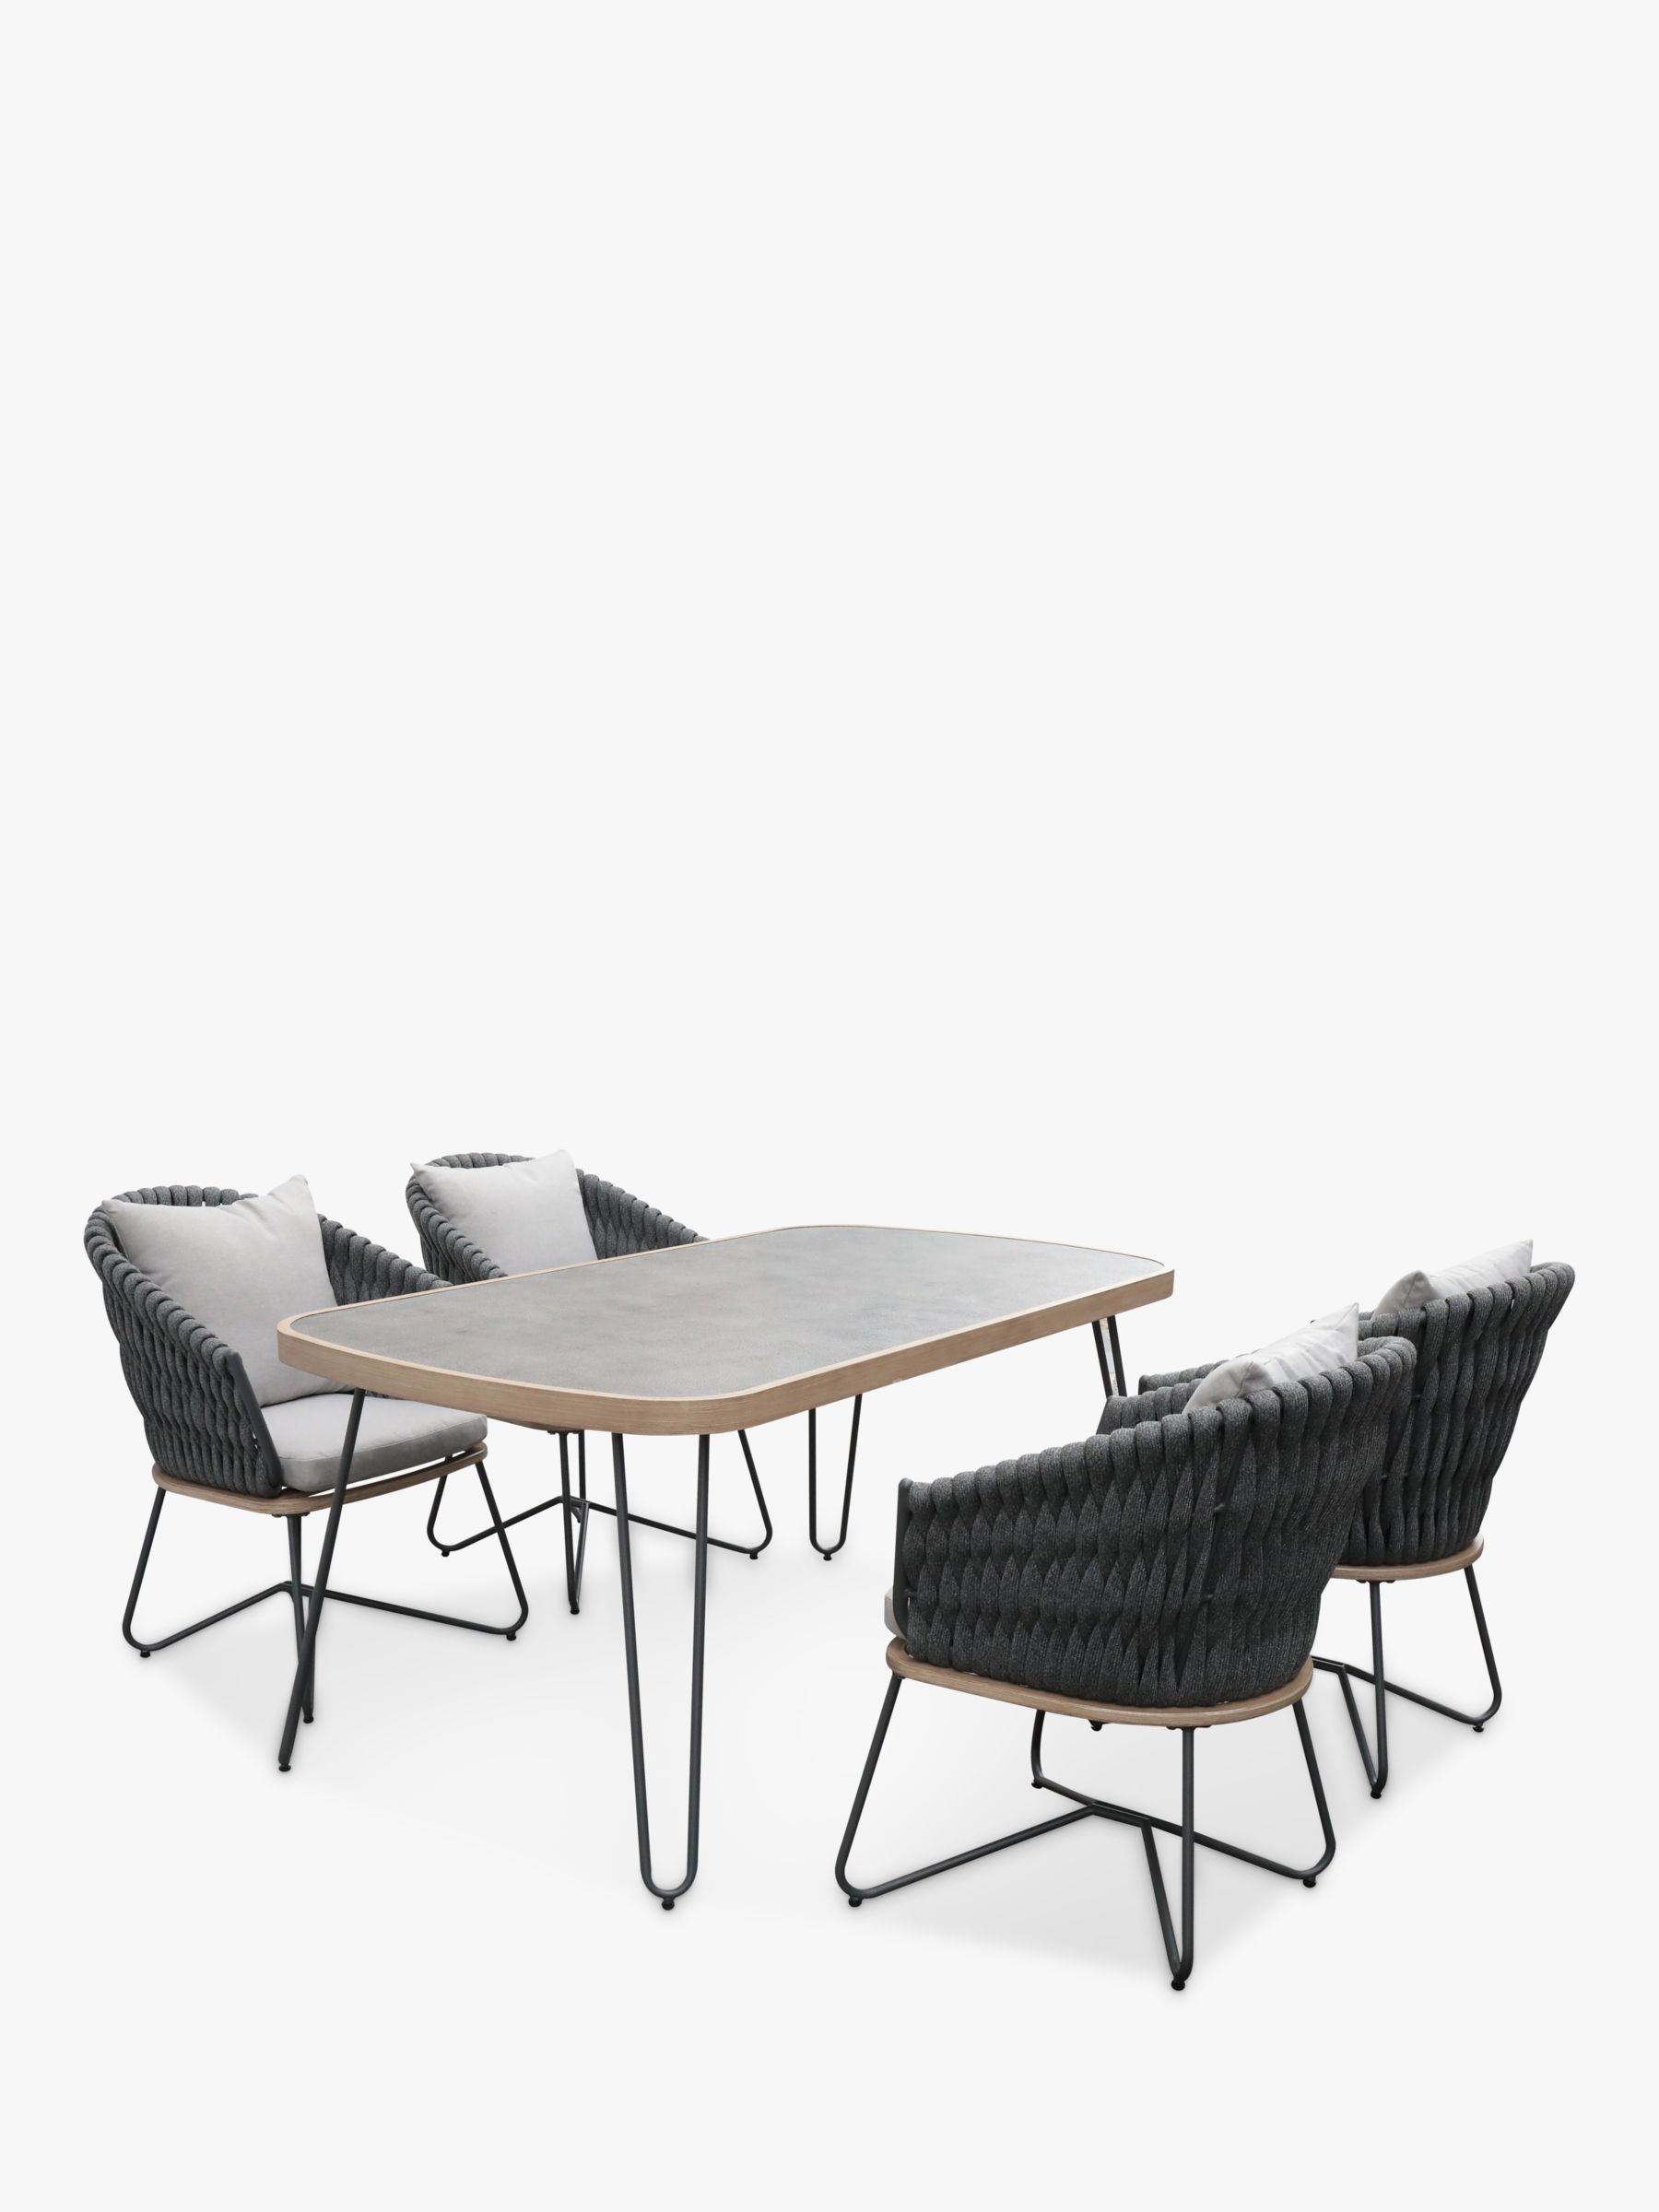 Photo of Kettler aruba 4-seater garden dining table & chairs set grey